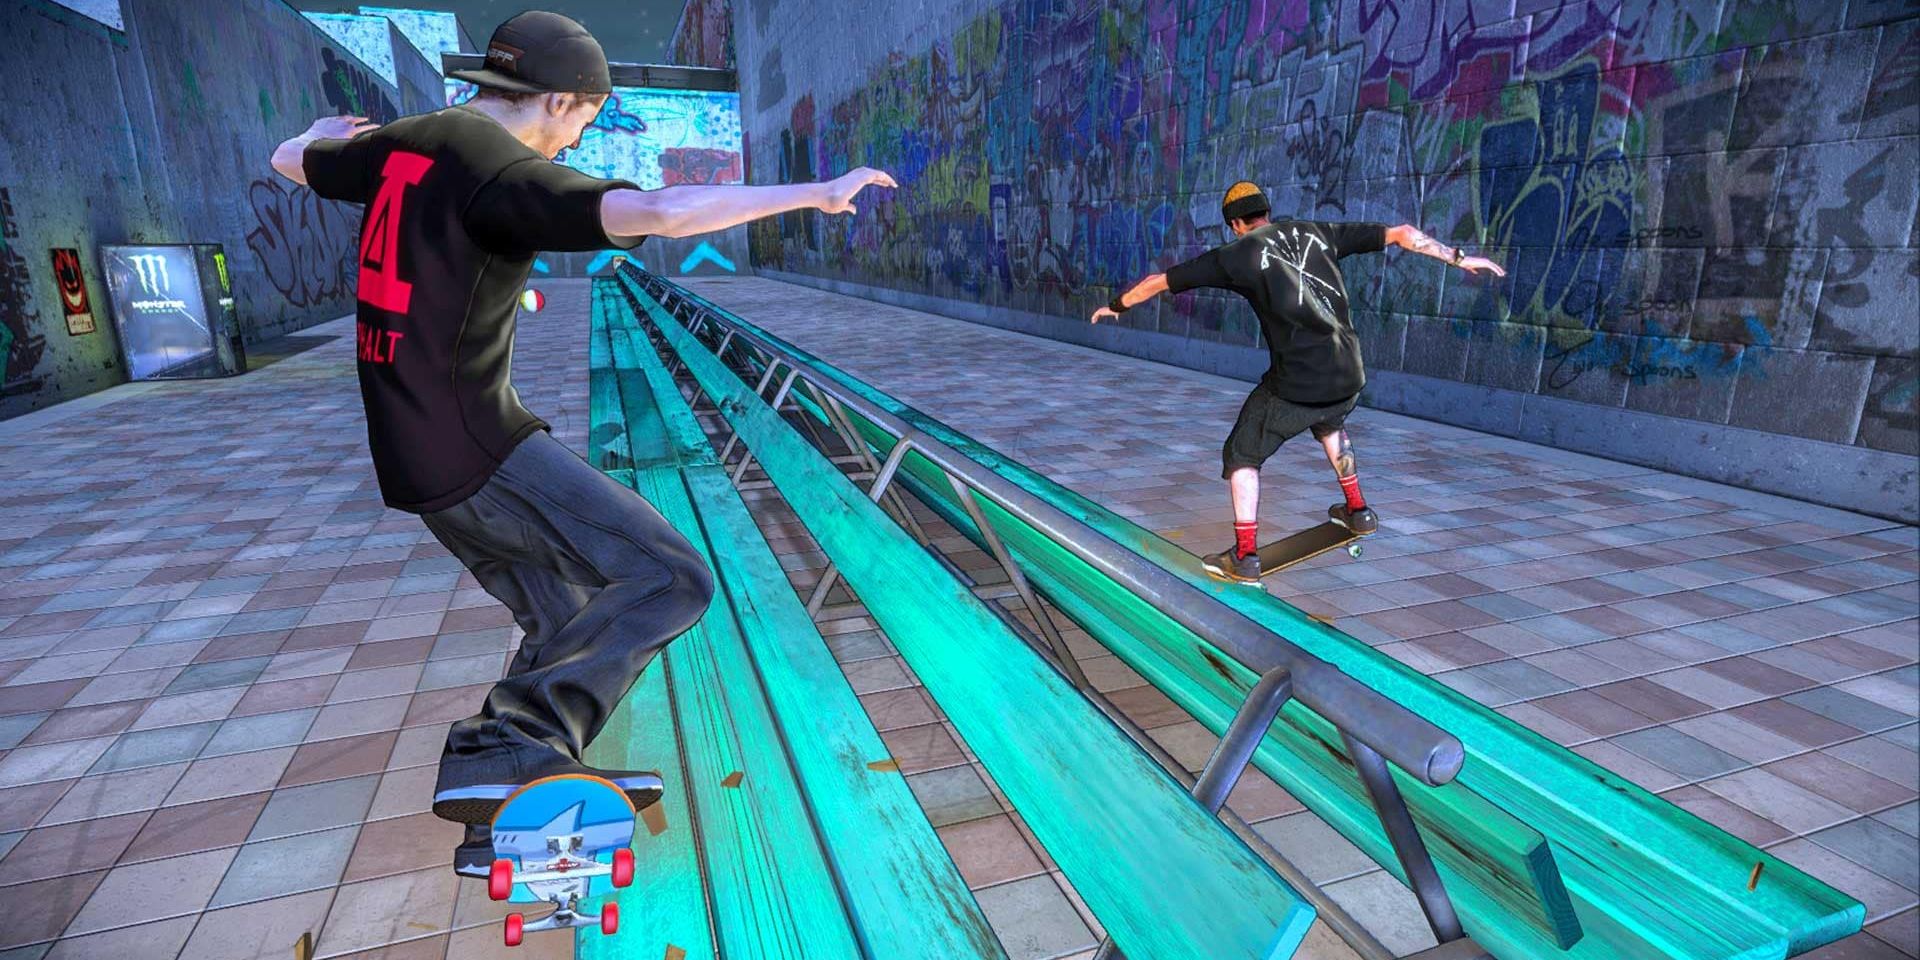 Two skateboarders grinding along rails.